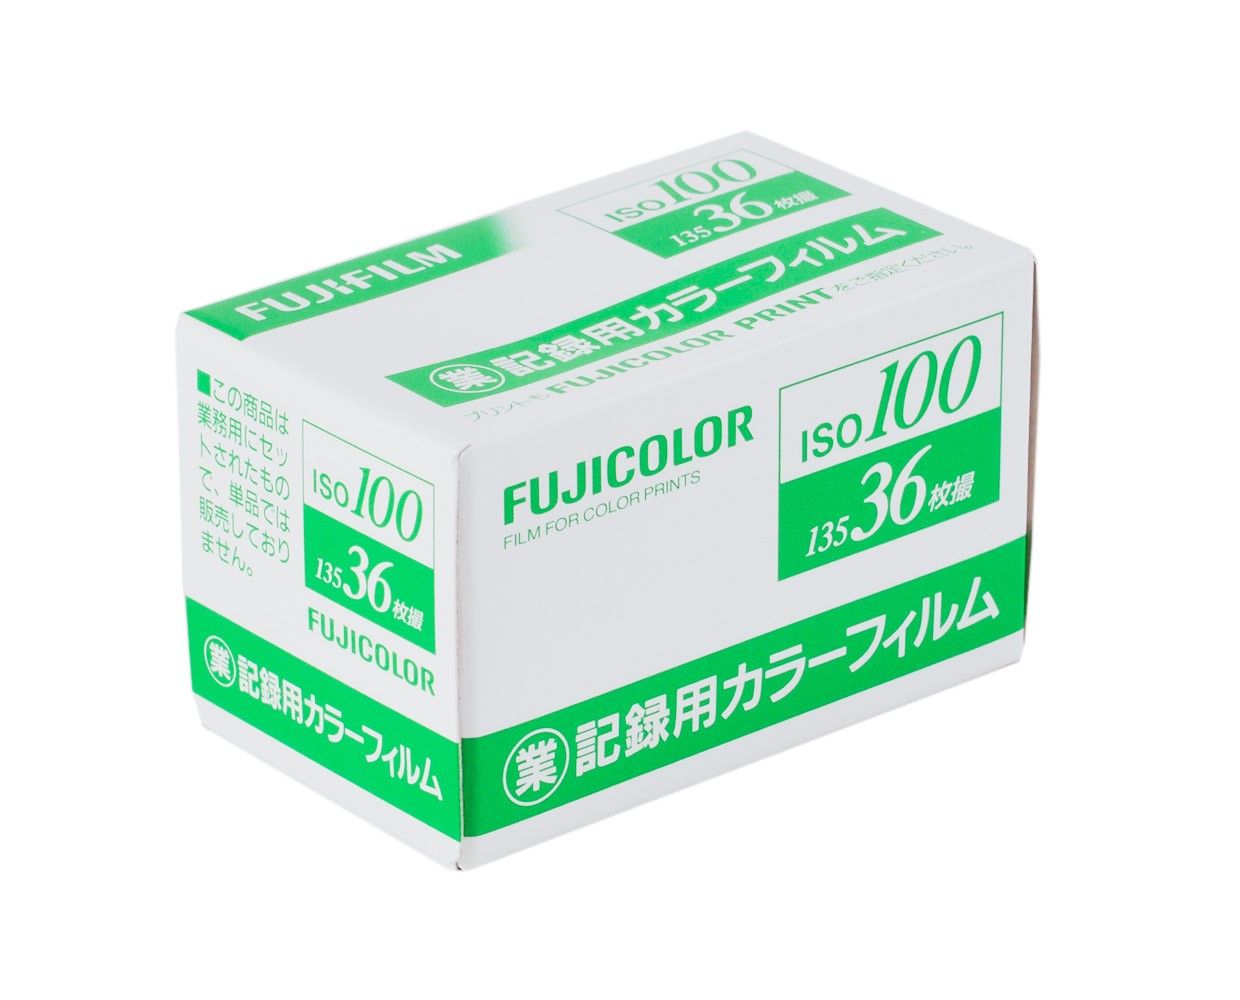 Fujicolor 100 35mm 36 exposures | Color negative films | Film